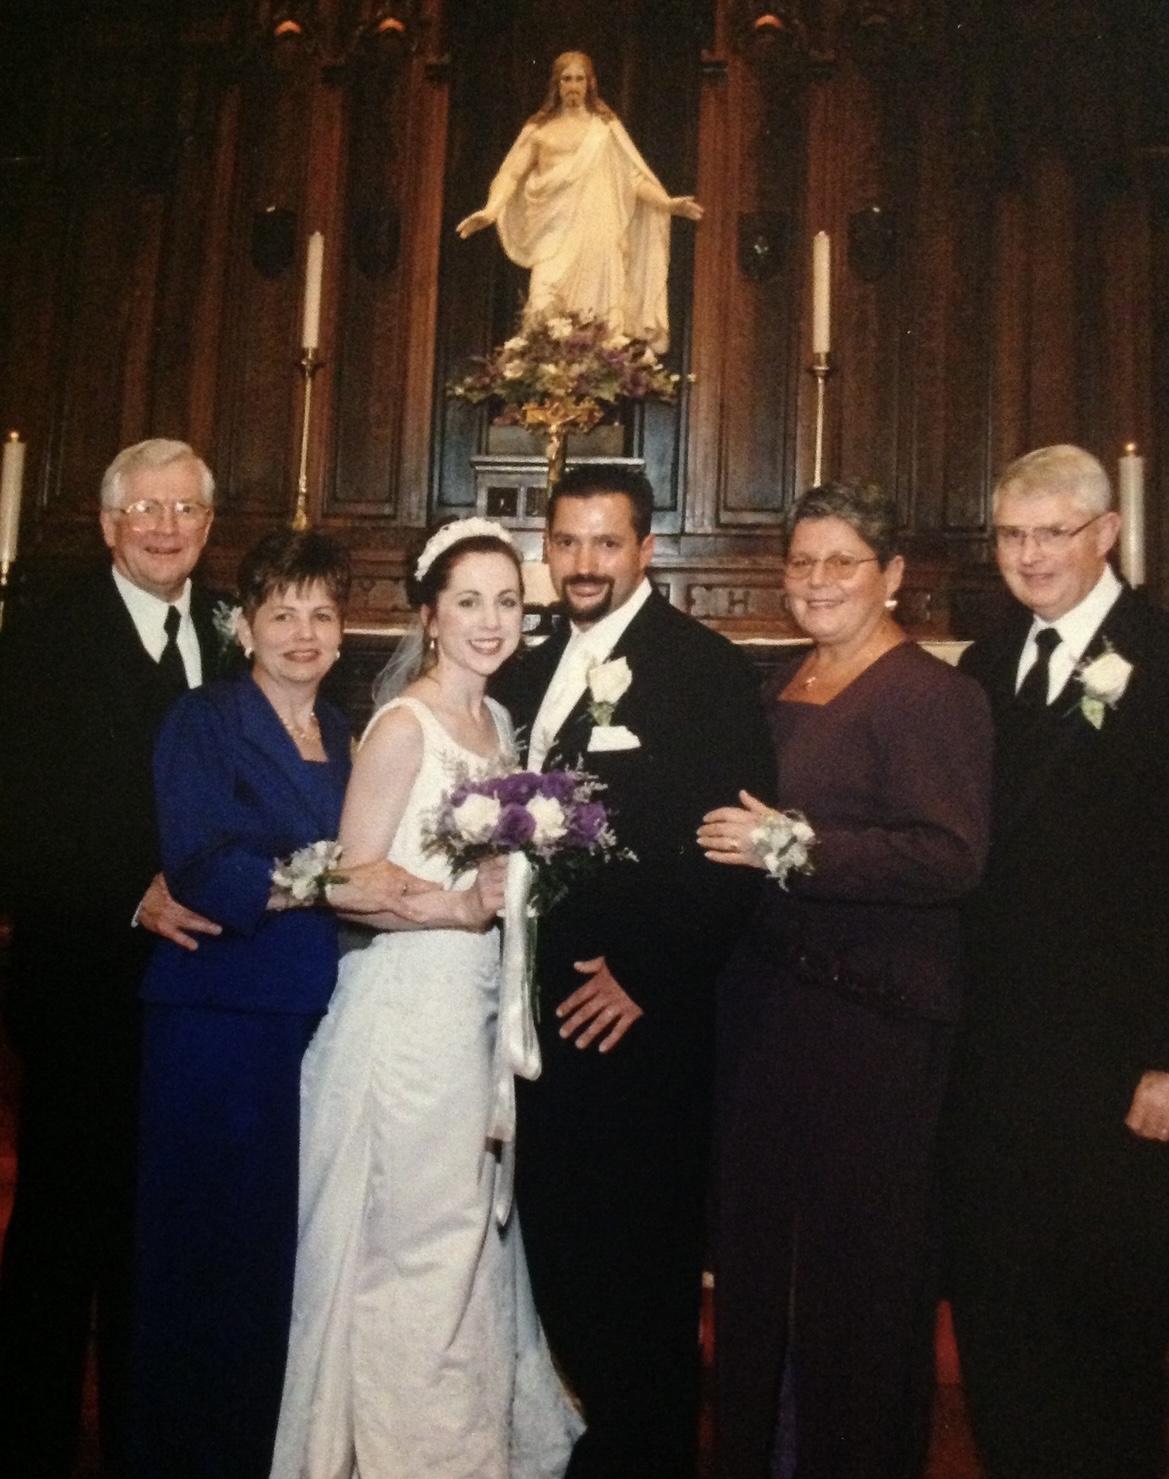 Jeff & Michelle Ryburn’s Wedding. Barb & Glenn Ryburn & Mary Jane & Dennis Connor.